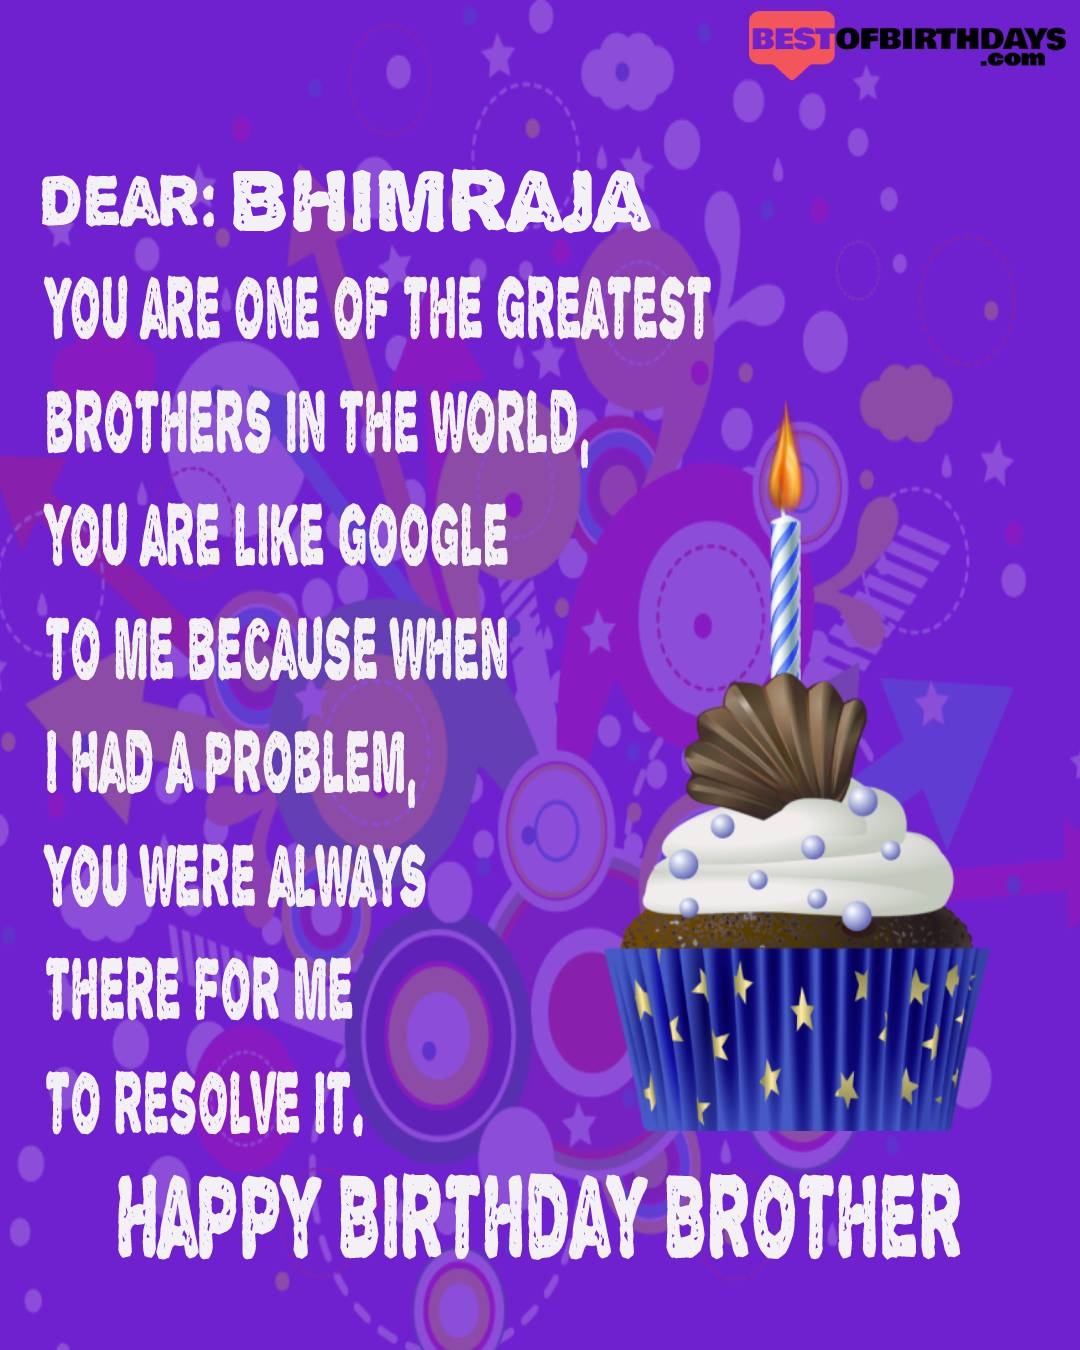 Happy birthday bhimraja bhai brother bro